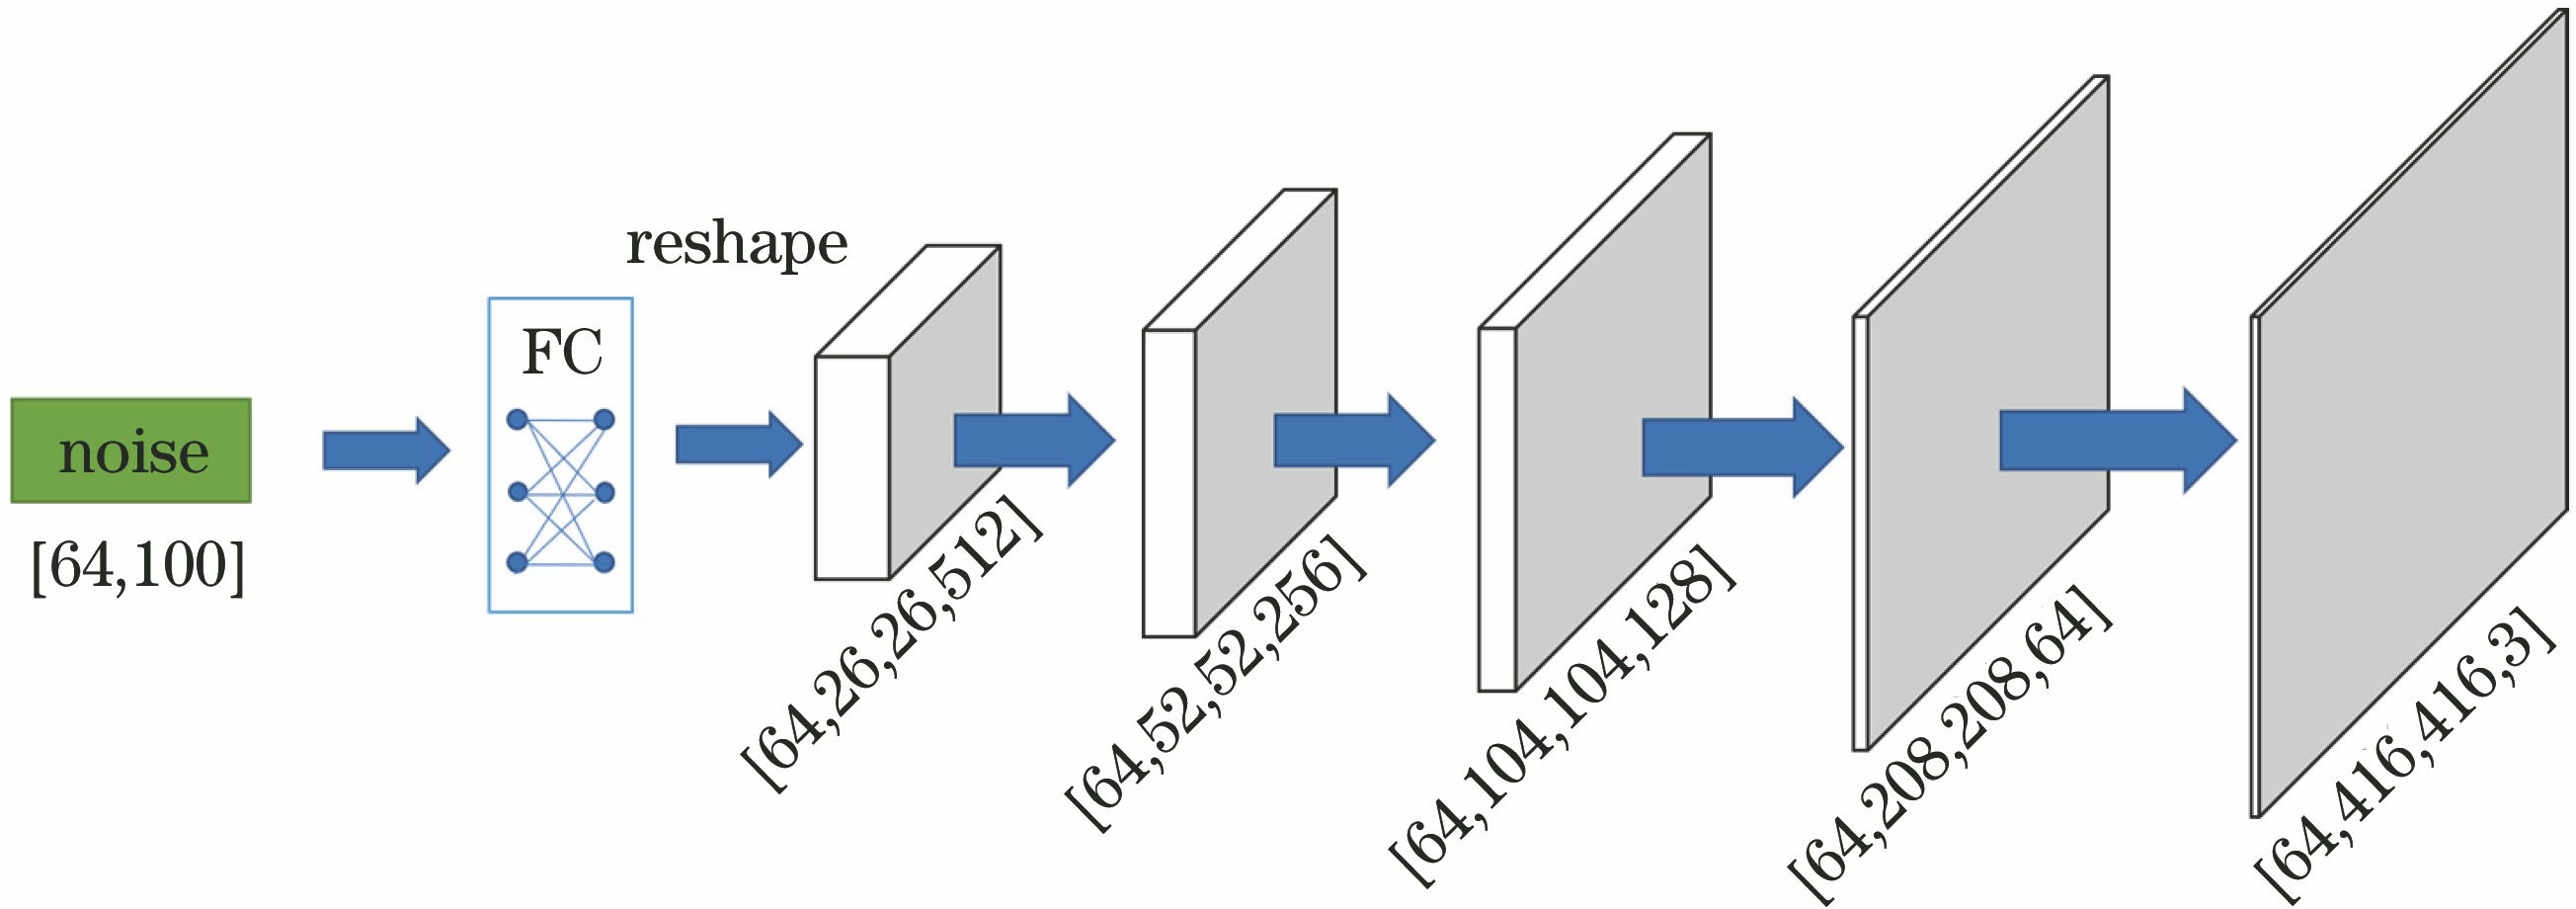 Generator network model for coarse-grained network